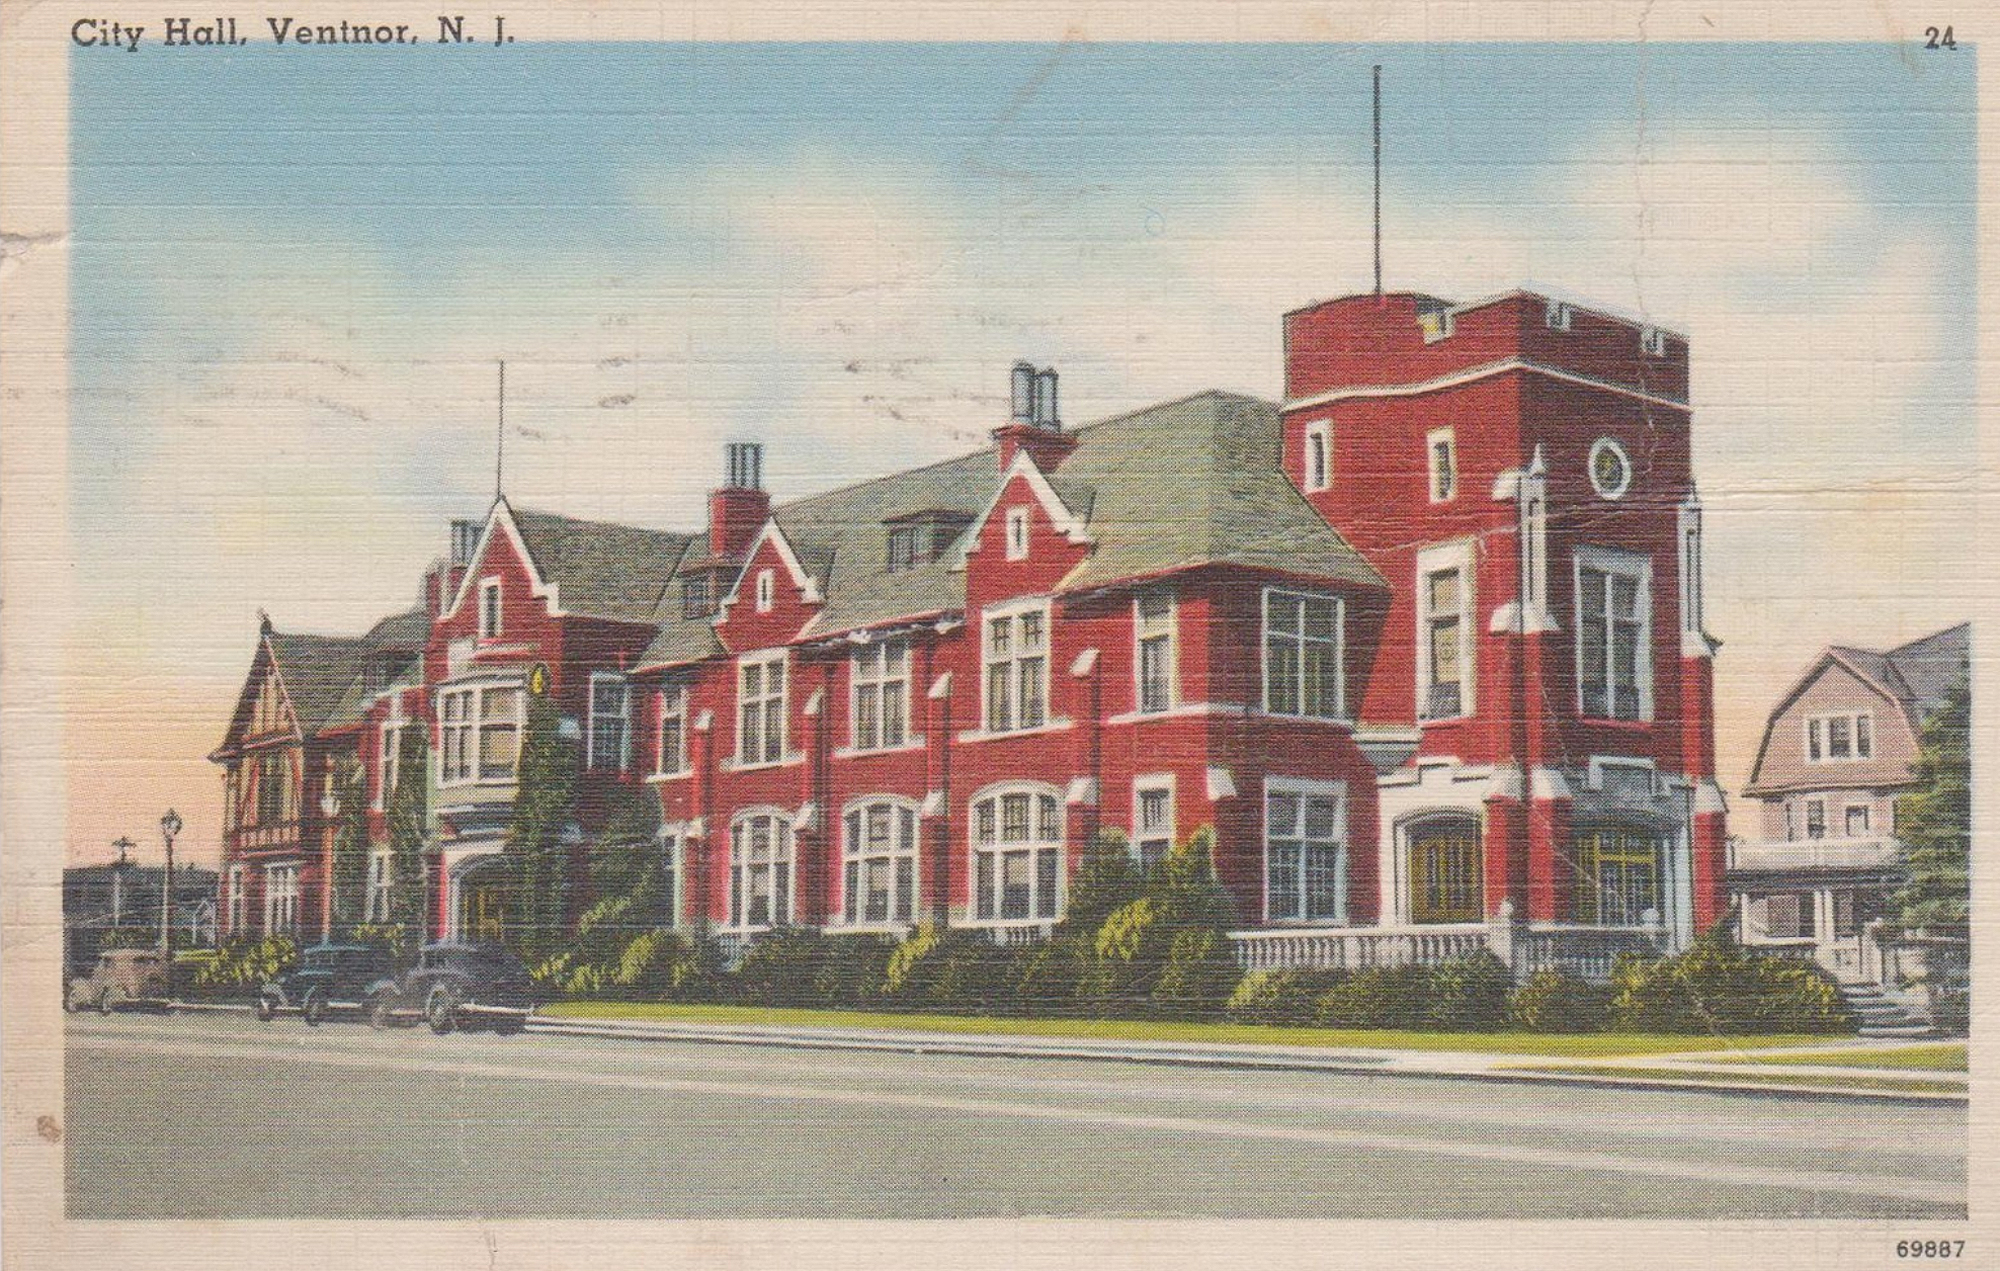 Ventnor - City Hall - 1944